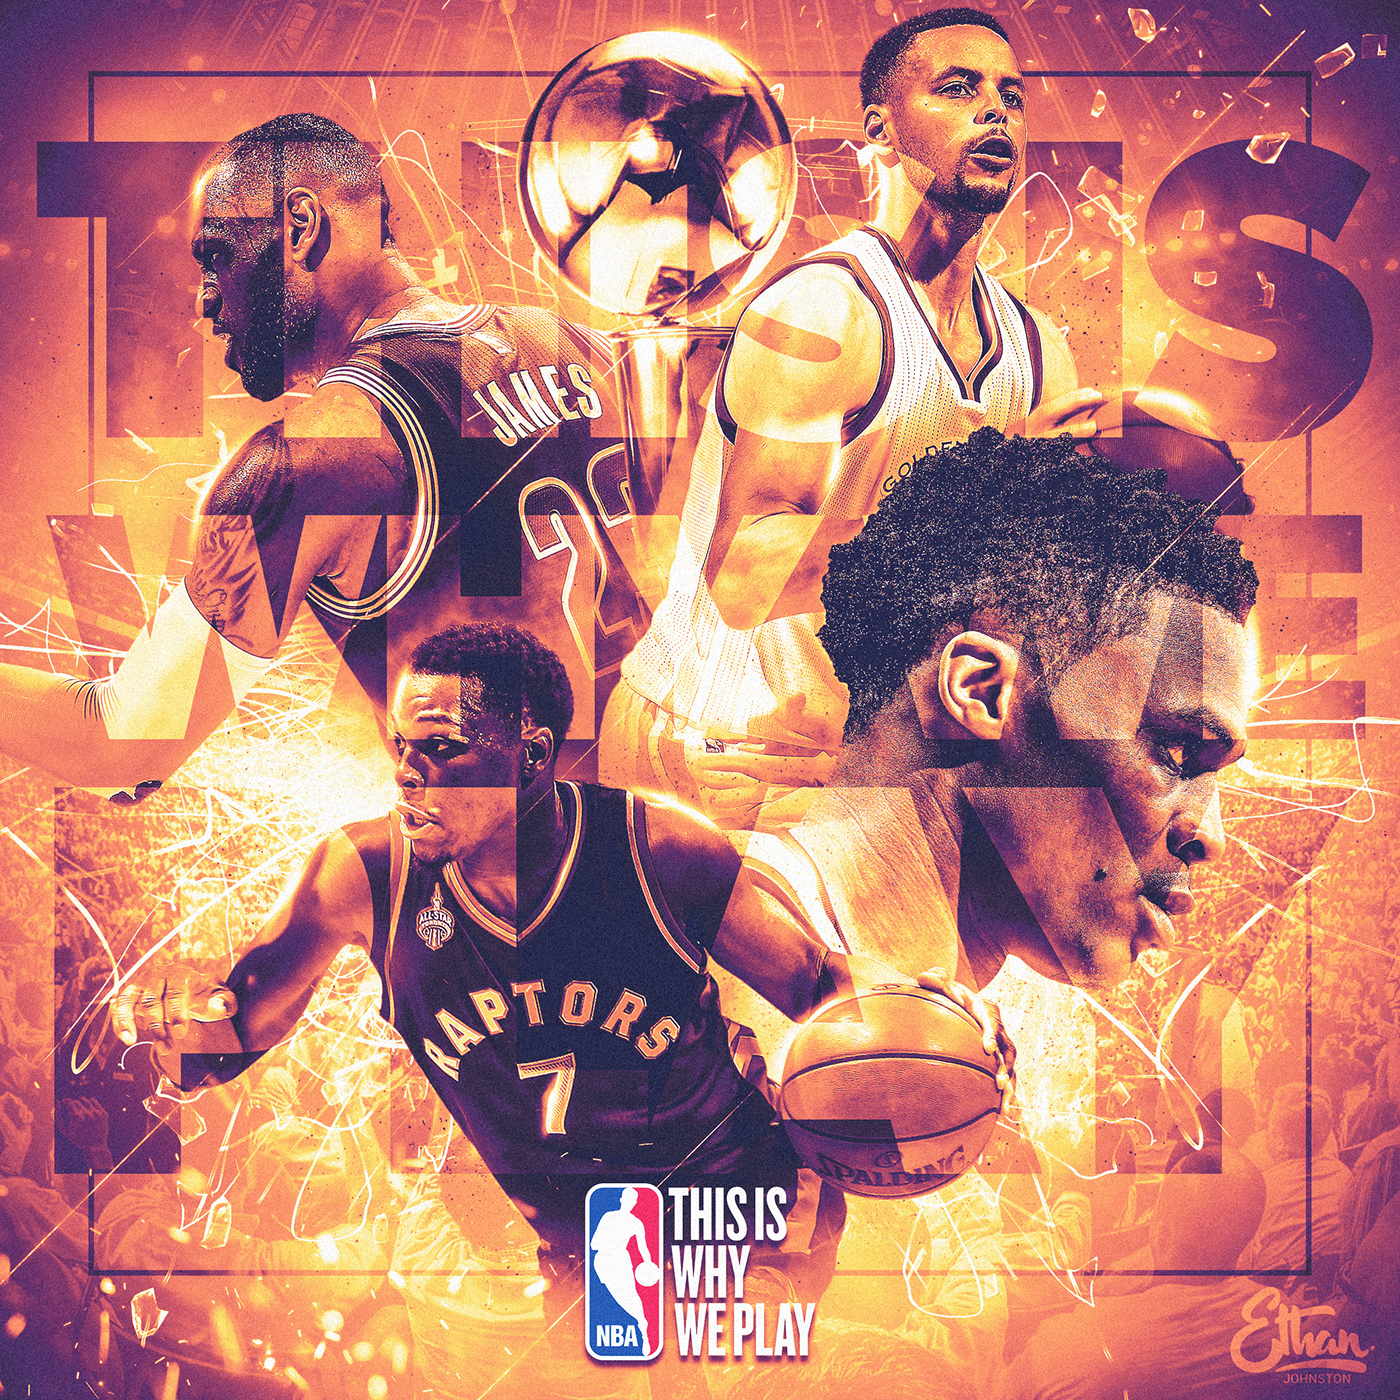 NBA social media basketball Cleveland Cavaliers warriors steph curry LeBron James WNBA Westbrook sports